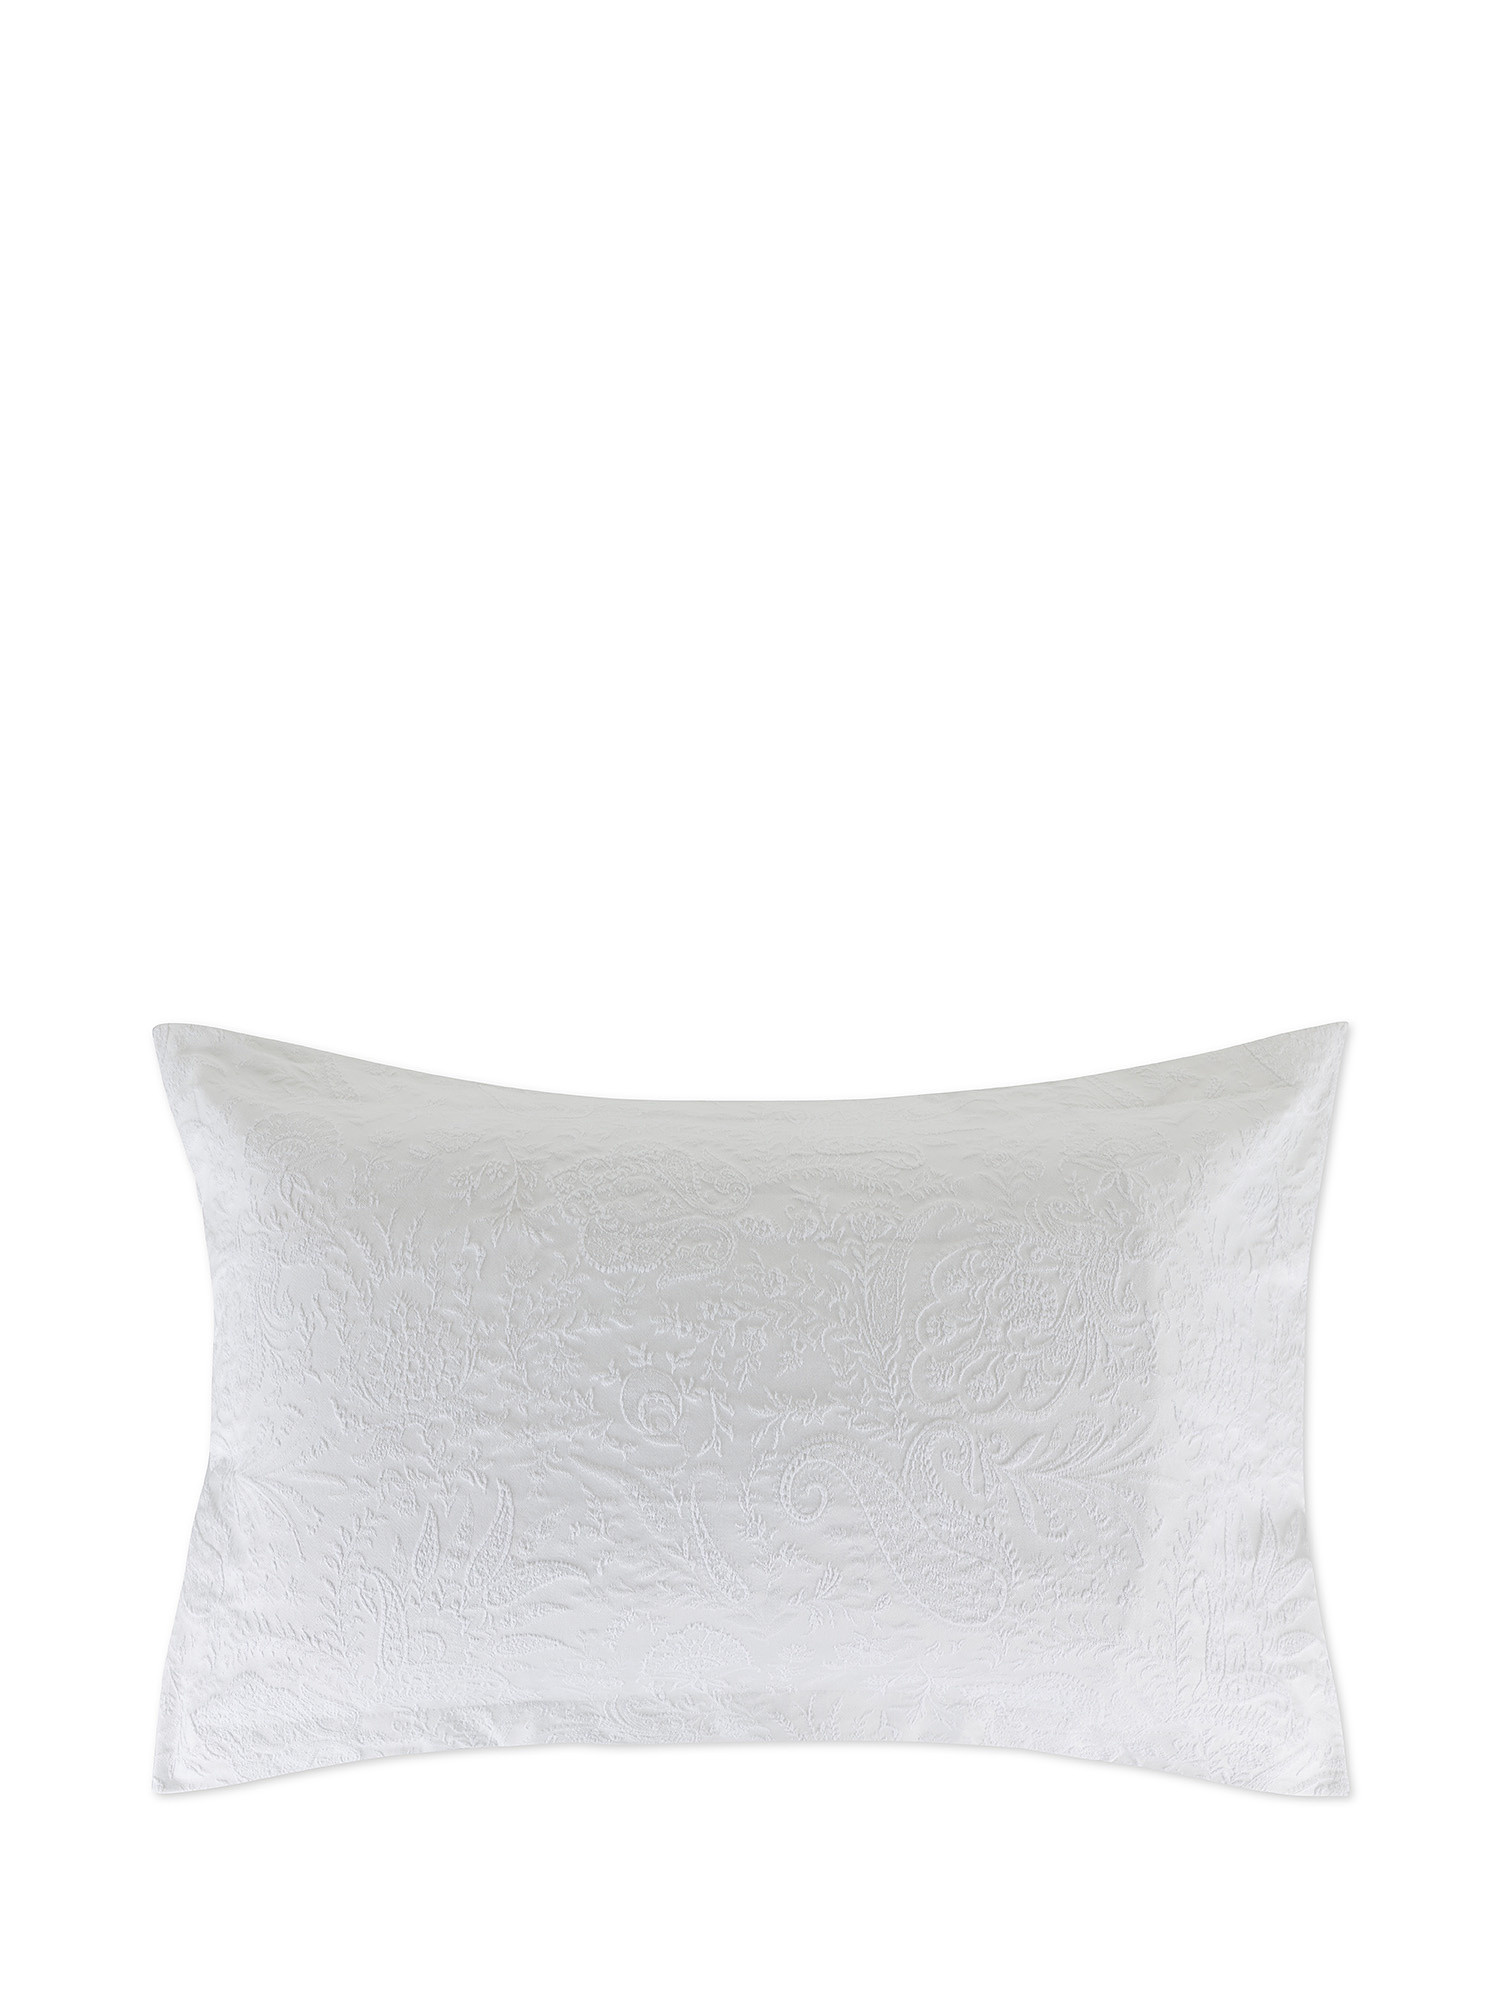 Portofino fantasy pillow cover for paisley, White, large image number 0